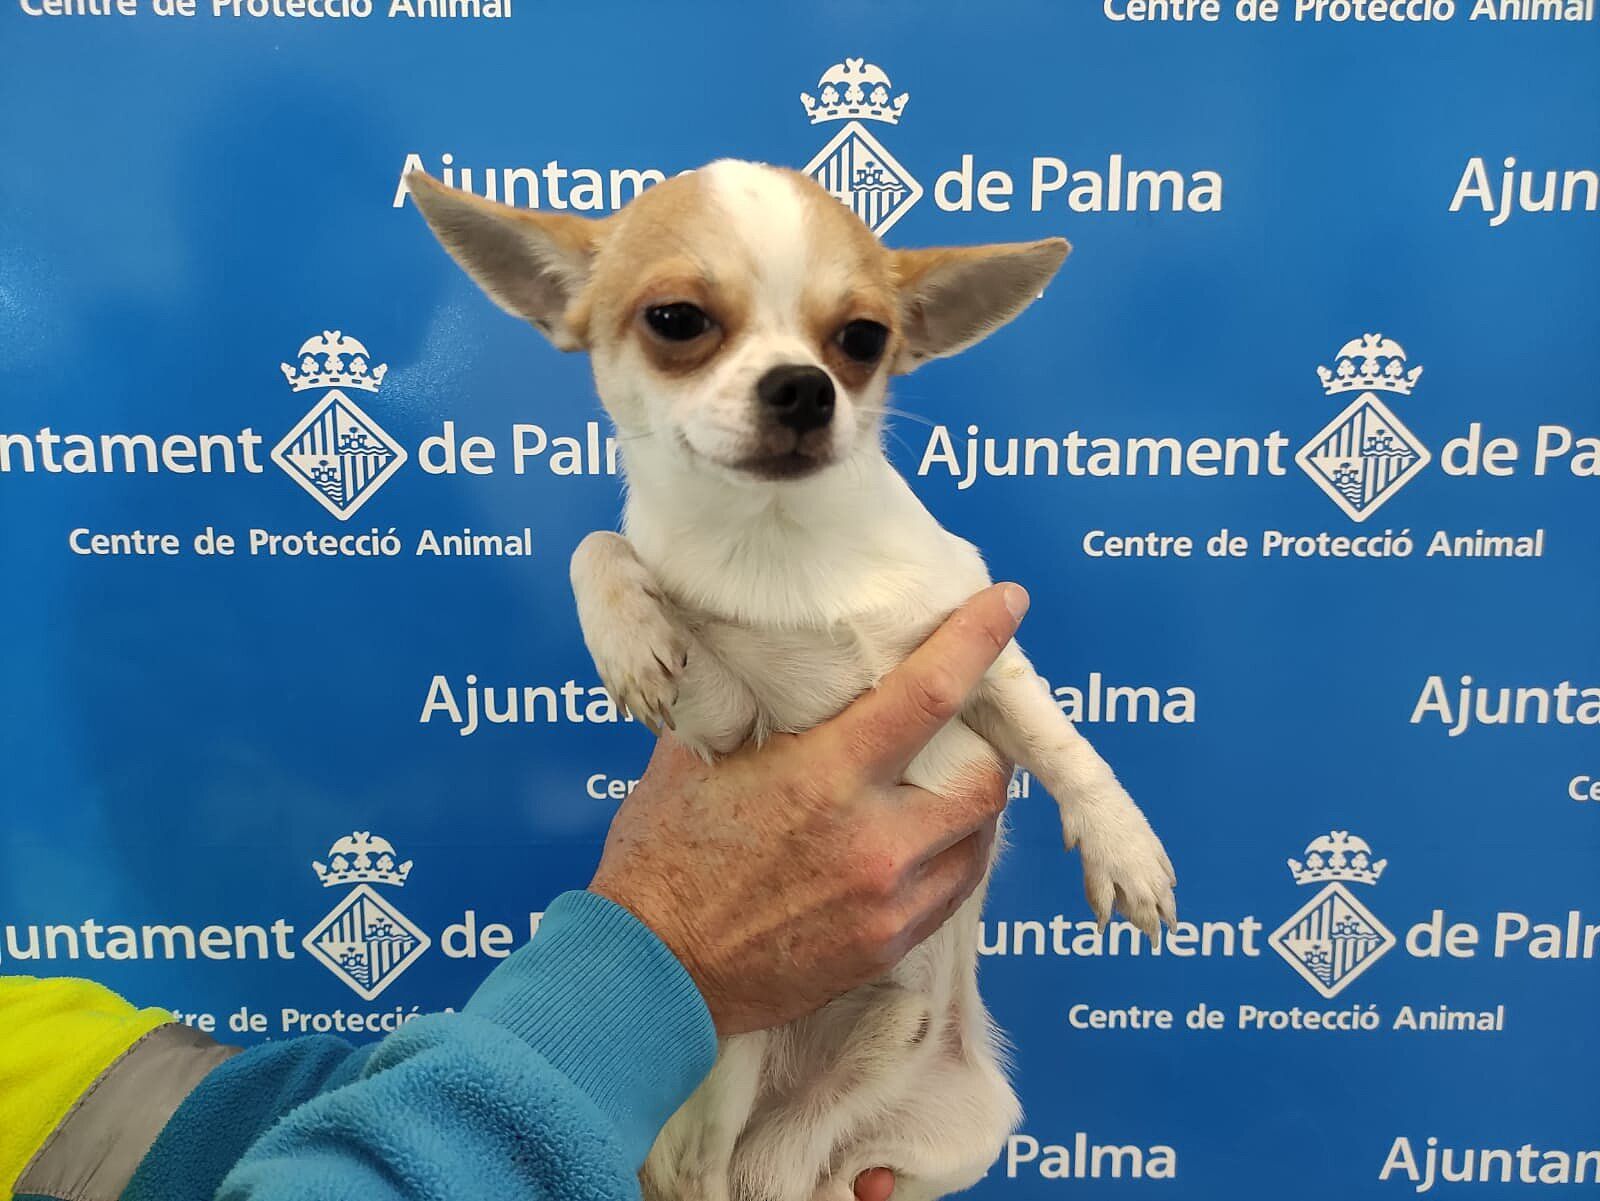 Chihuahua.jpg